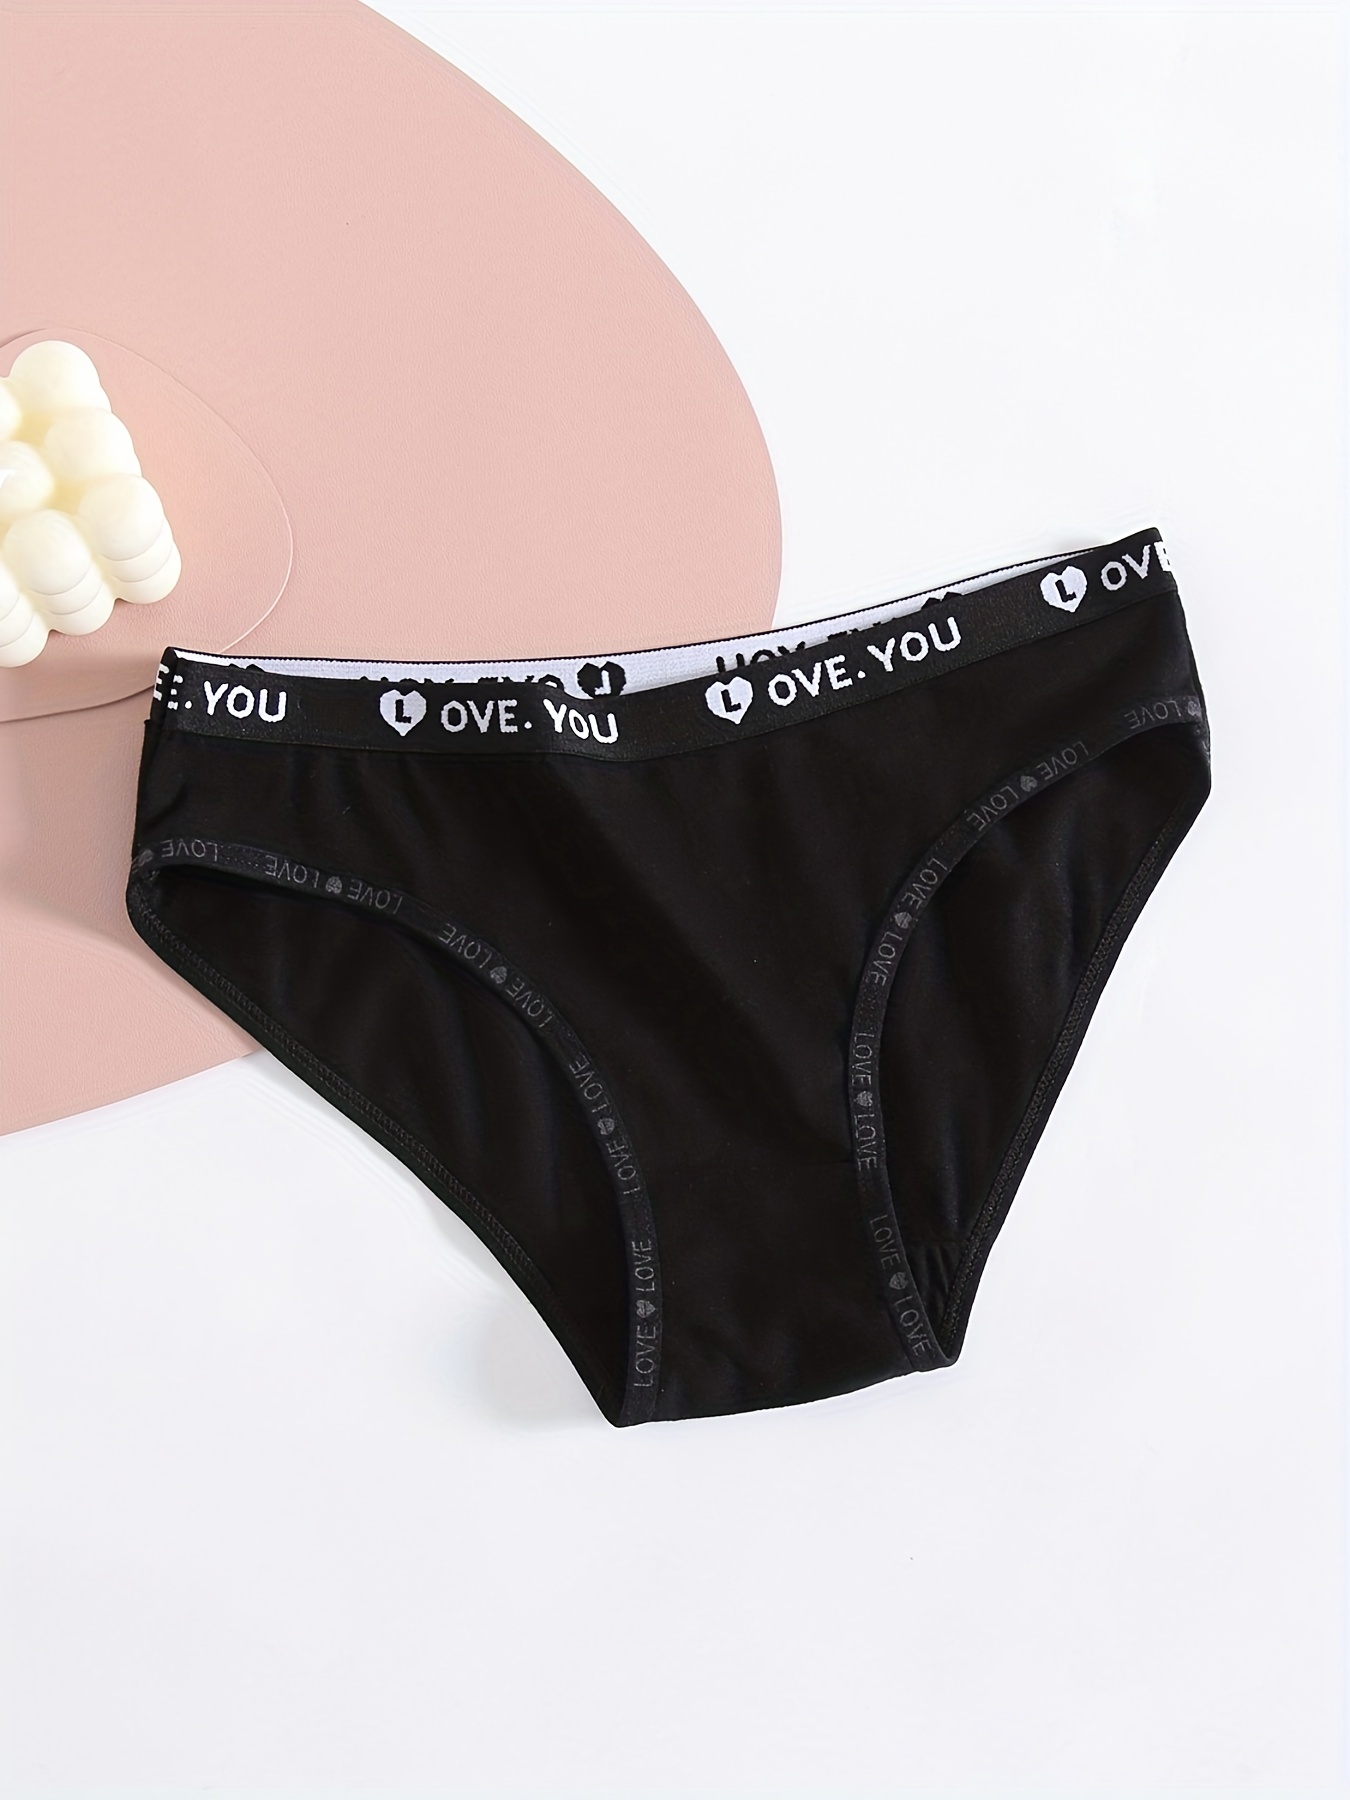 5pcs Letter Tape Briefs, Breathable & Comfy Stretchy Intimates Panties,  Women's Lingerie & Underwear